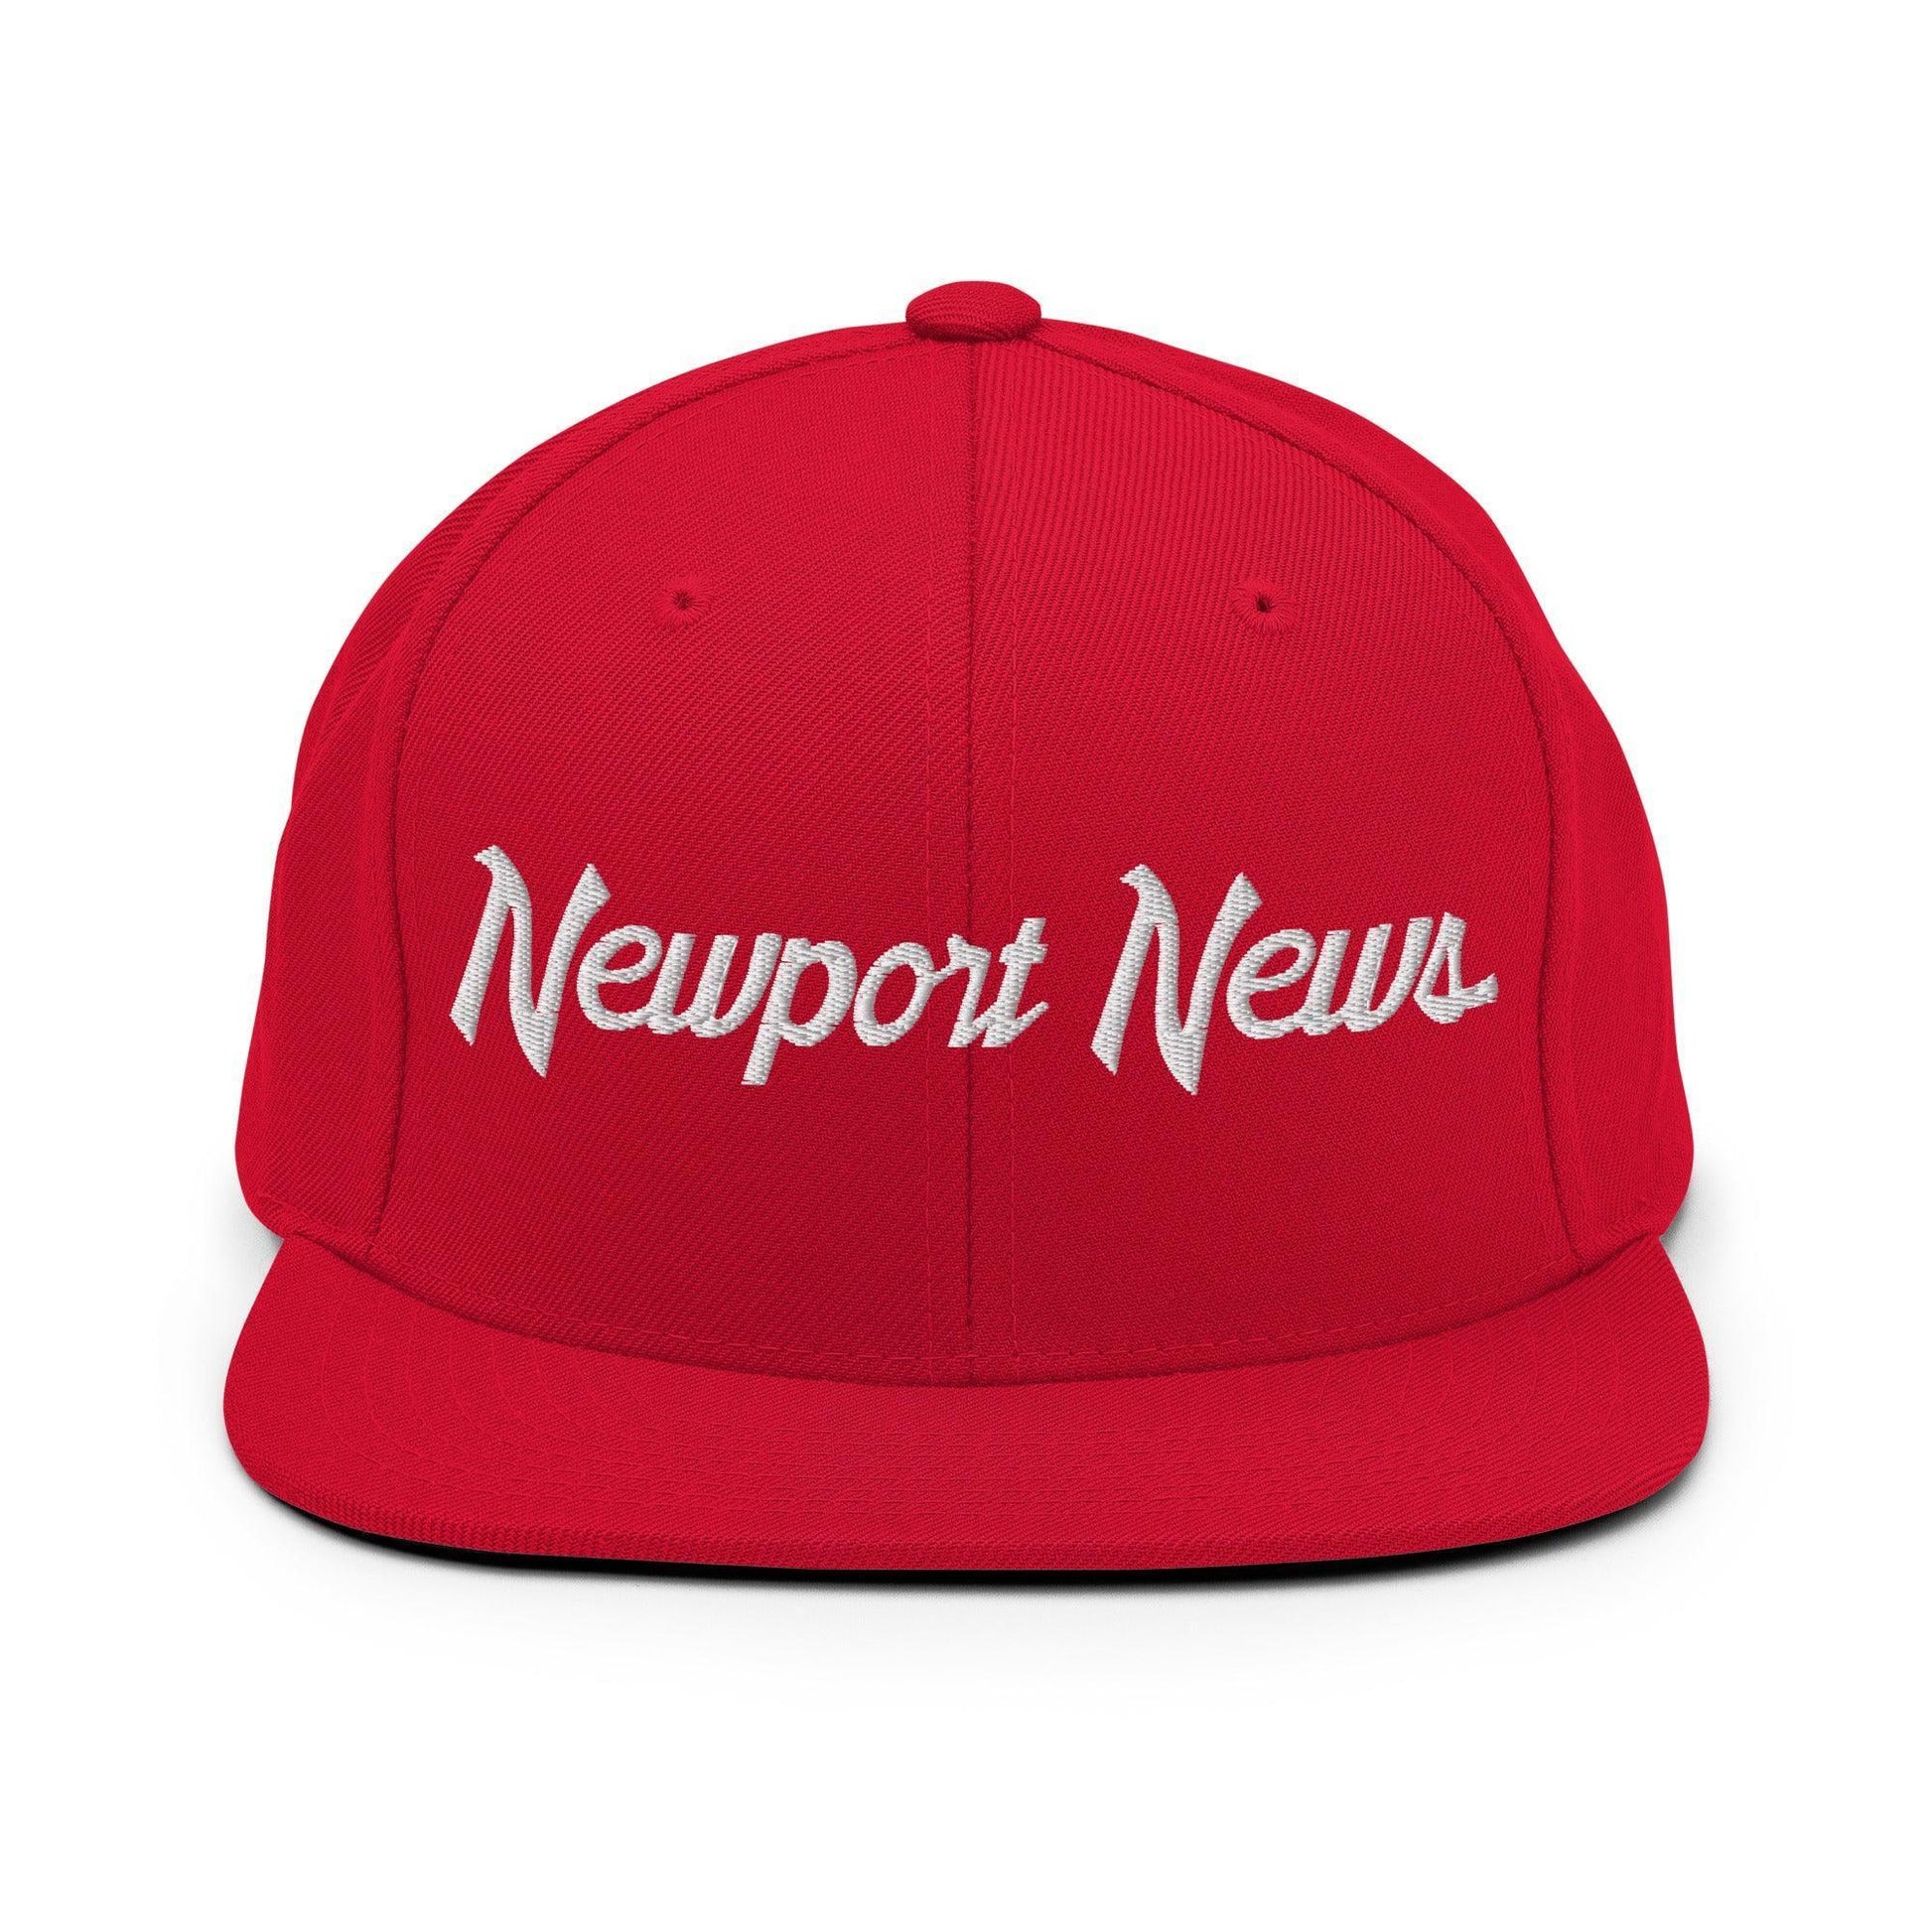 Newport News Script Snapback Hat Red